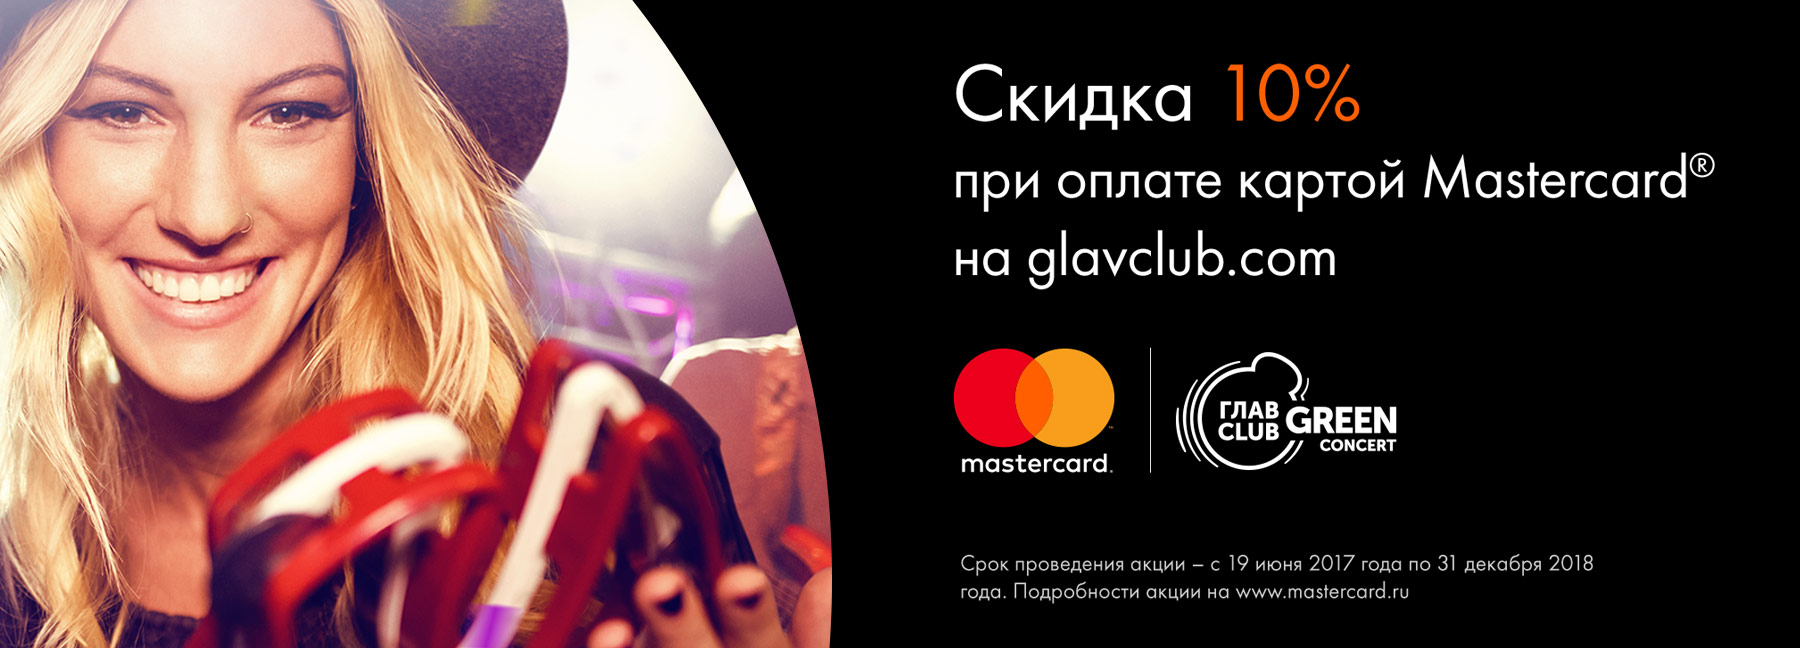 Рекламная акция ГЛАВ CLUB GREEN CONCERT и Mastercard «Скидка 10% на билеты на glavclub.com»